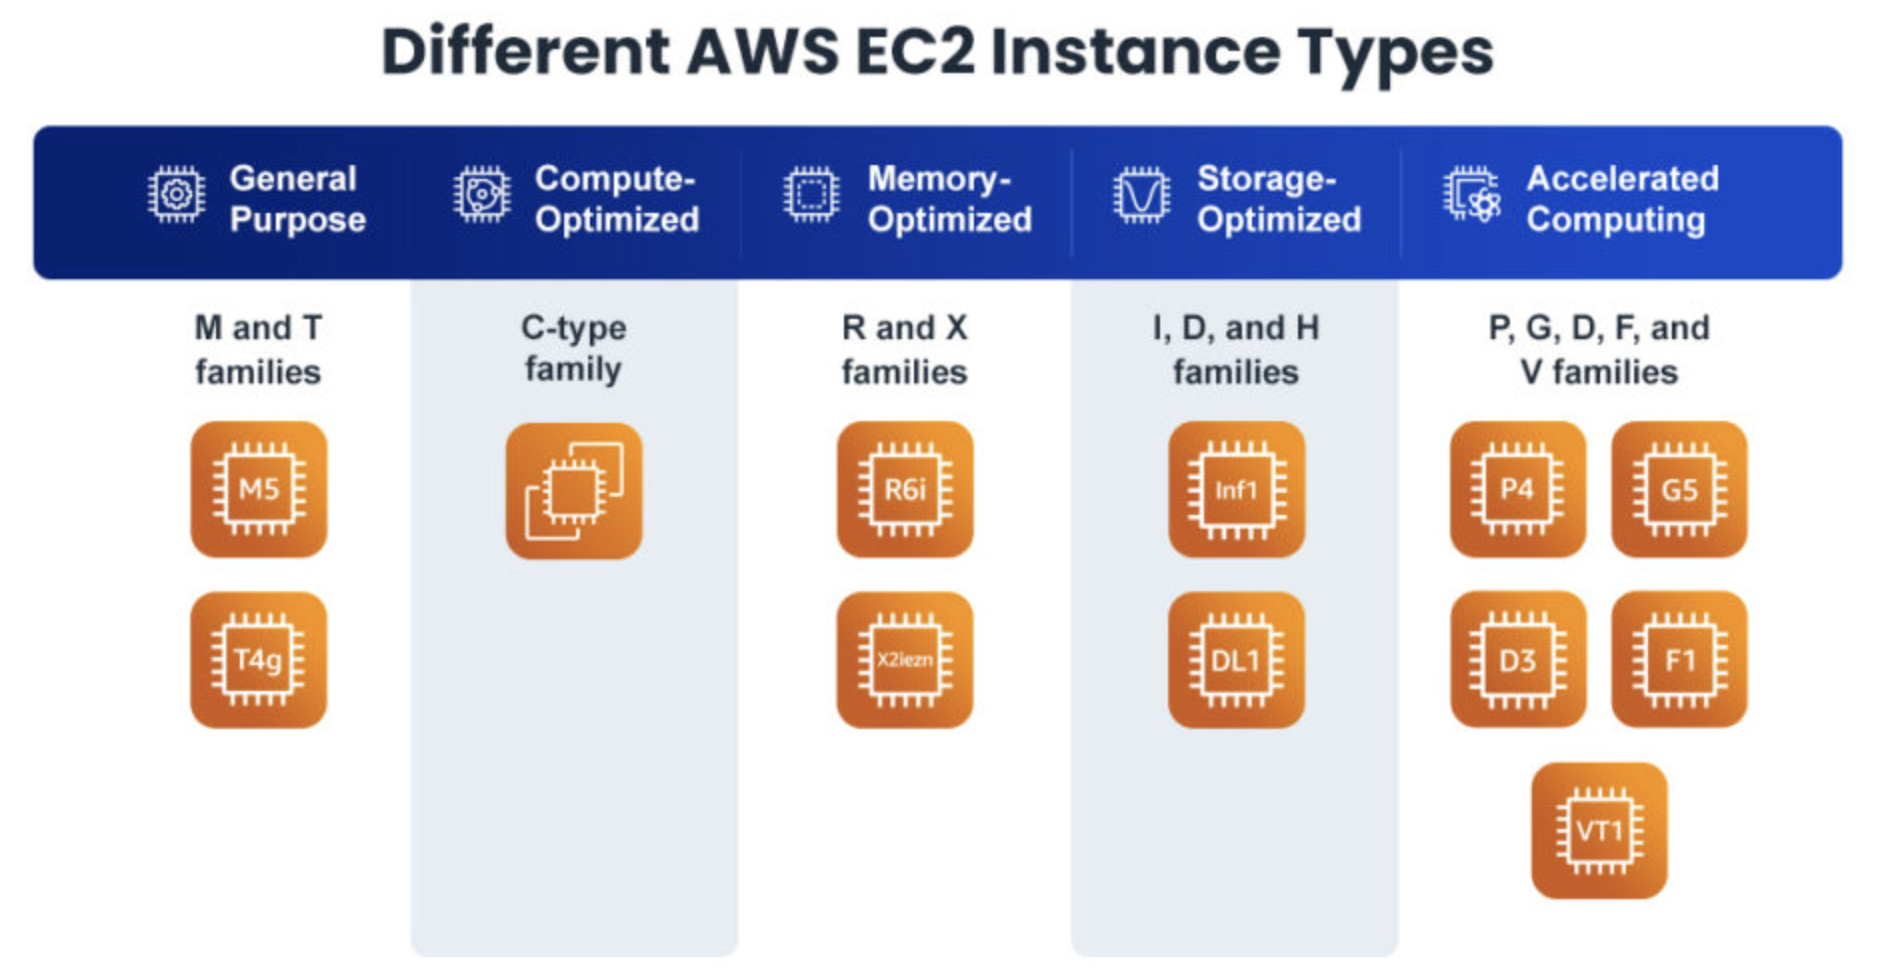 AWS EC2 Instance Types